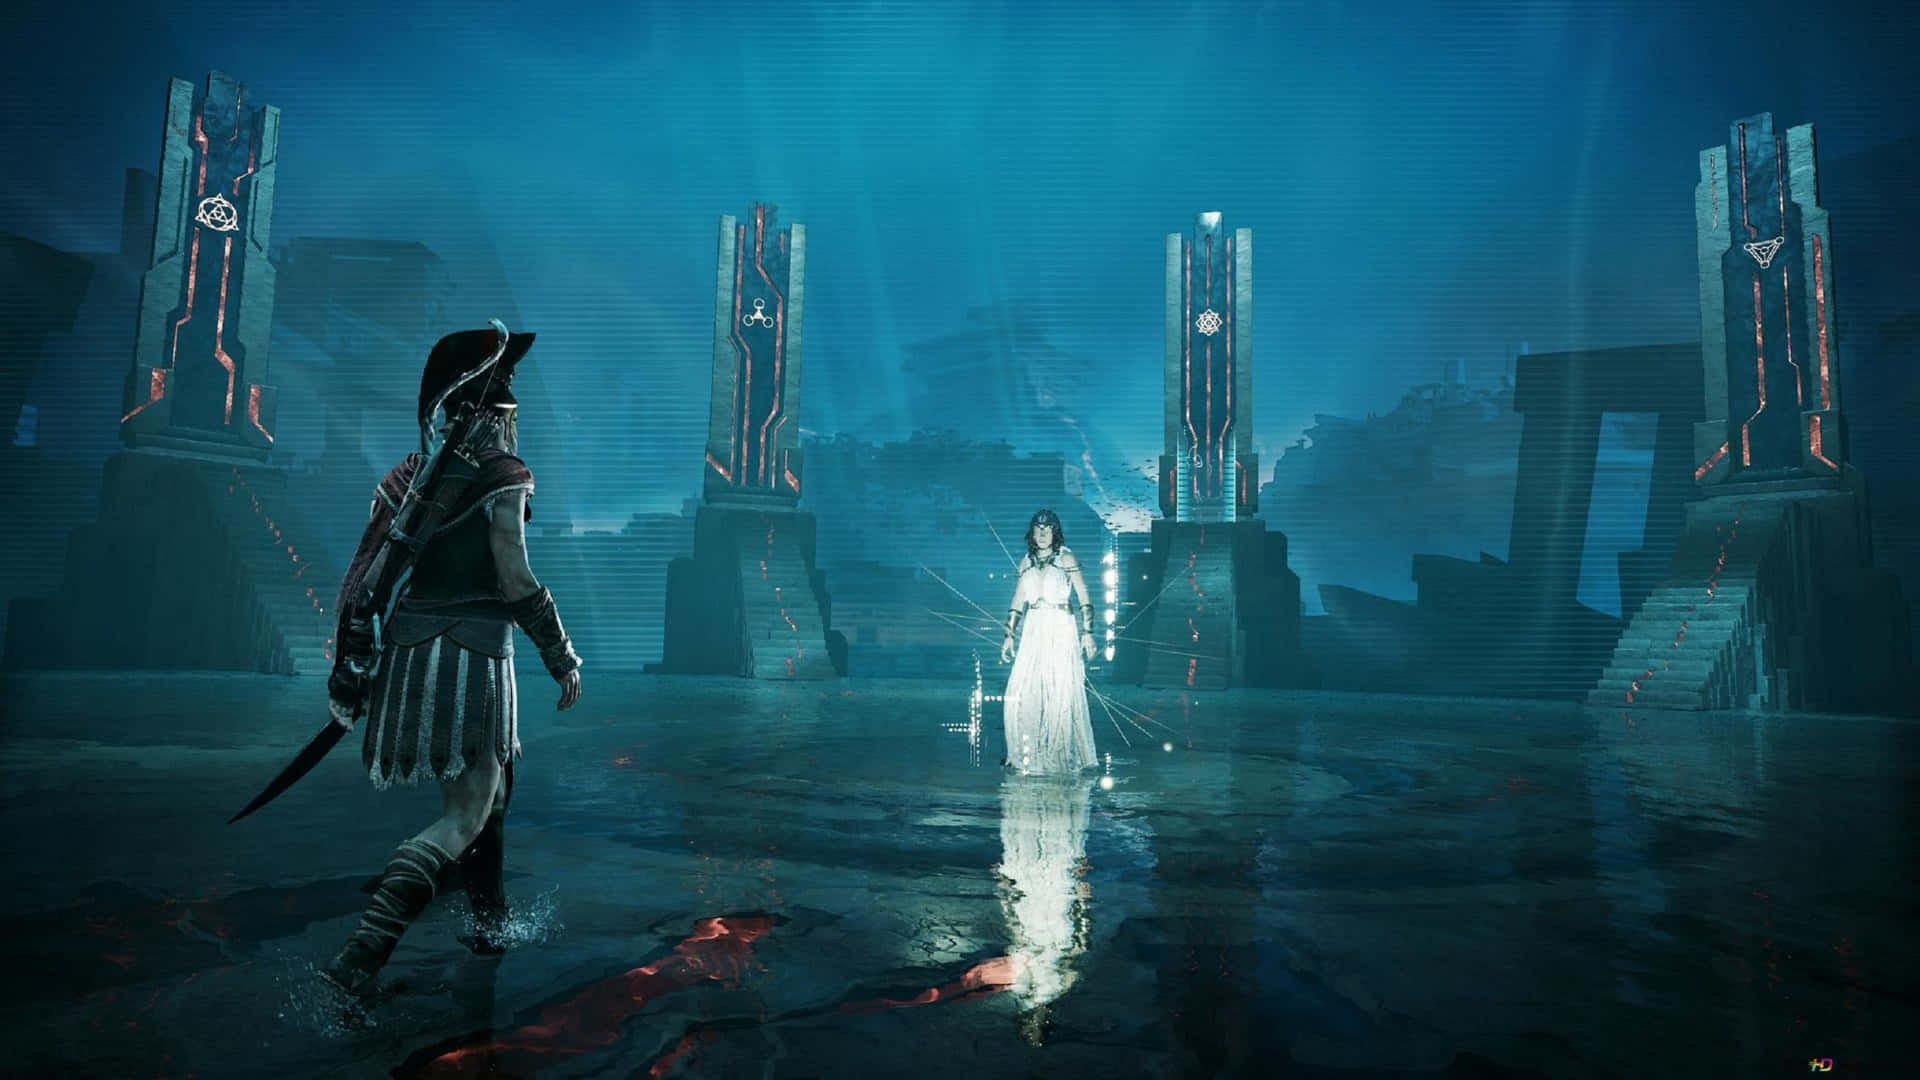 1920x1080bakgrundsbild Av Assassin's Creed Odyssey I Vitt.